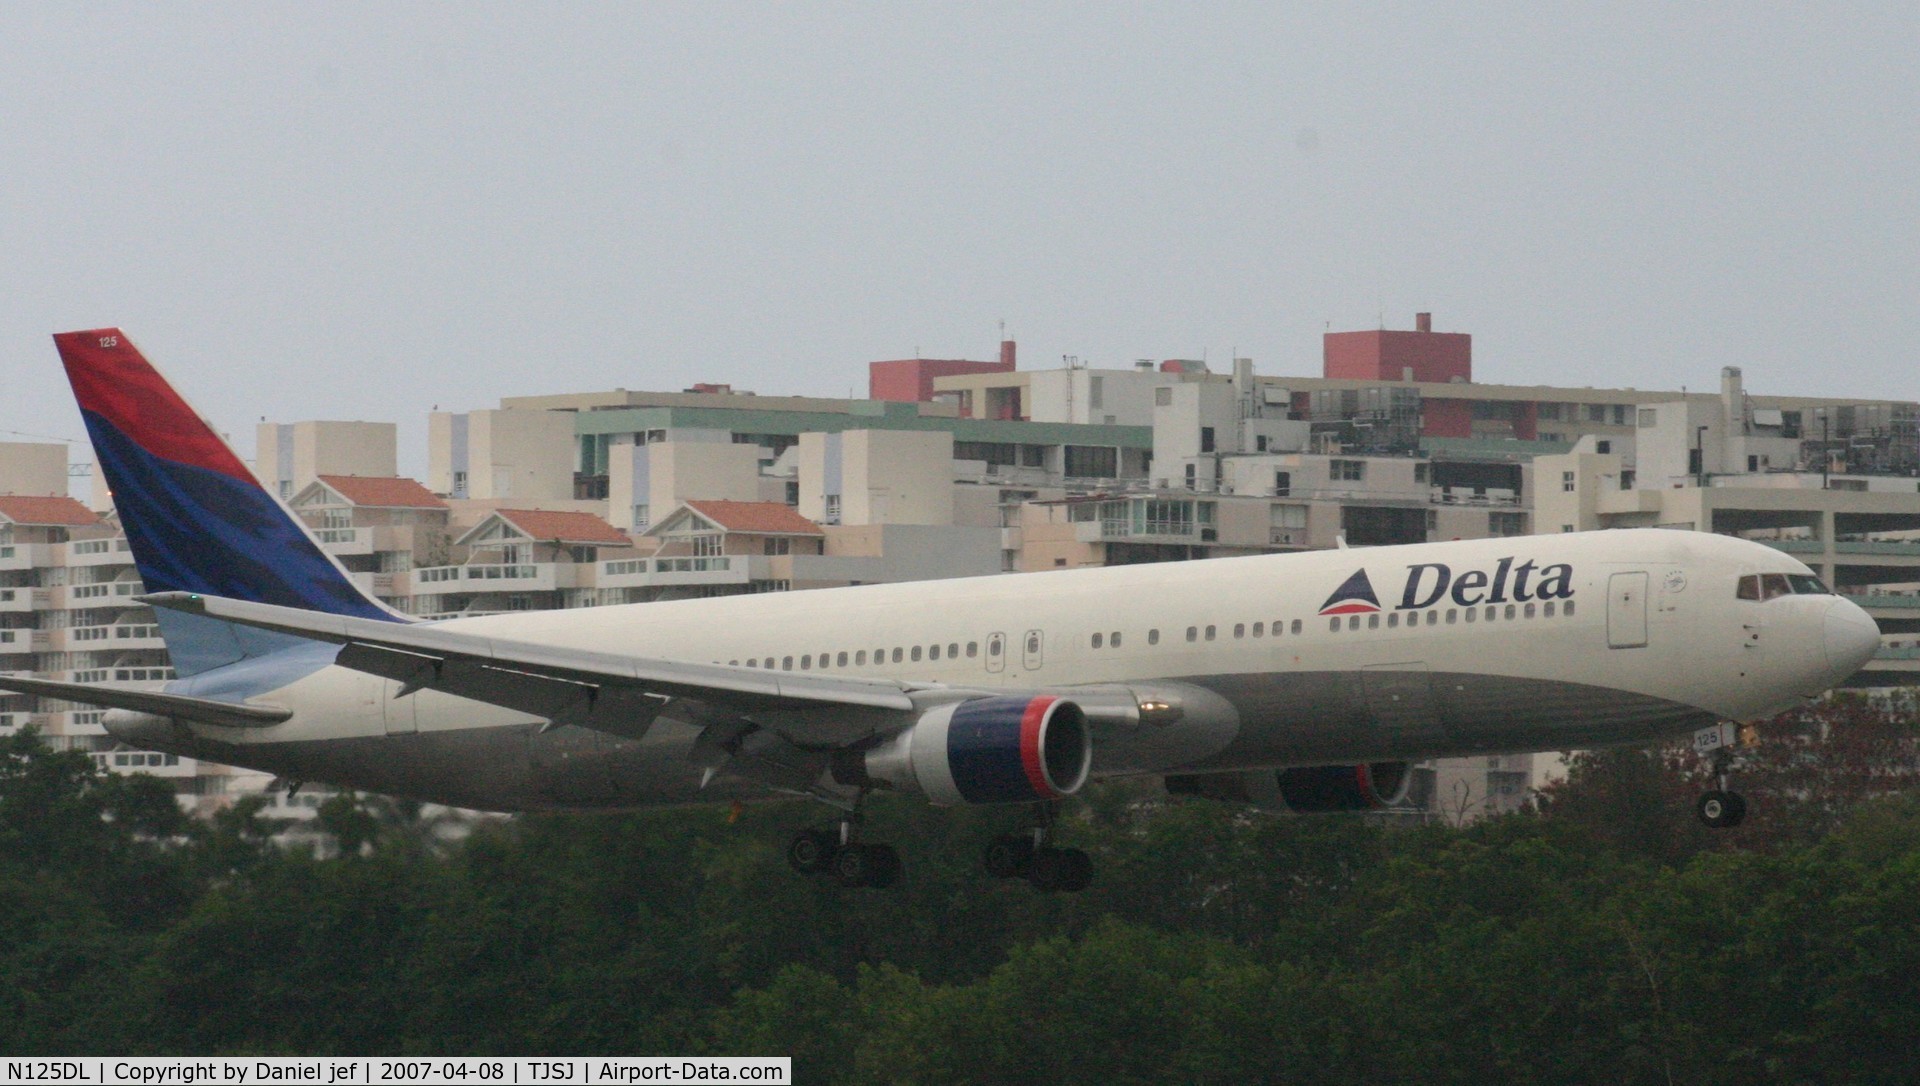 N125DL, 1988 Boeing 767-332 C/N 24075, Delta airlines landing at TJSJ